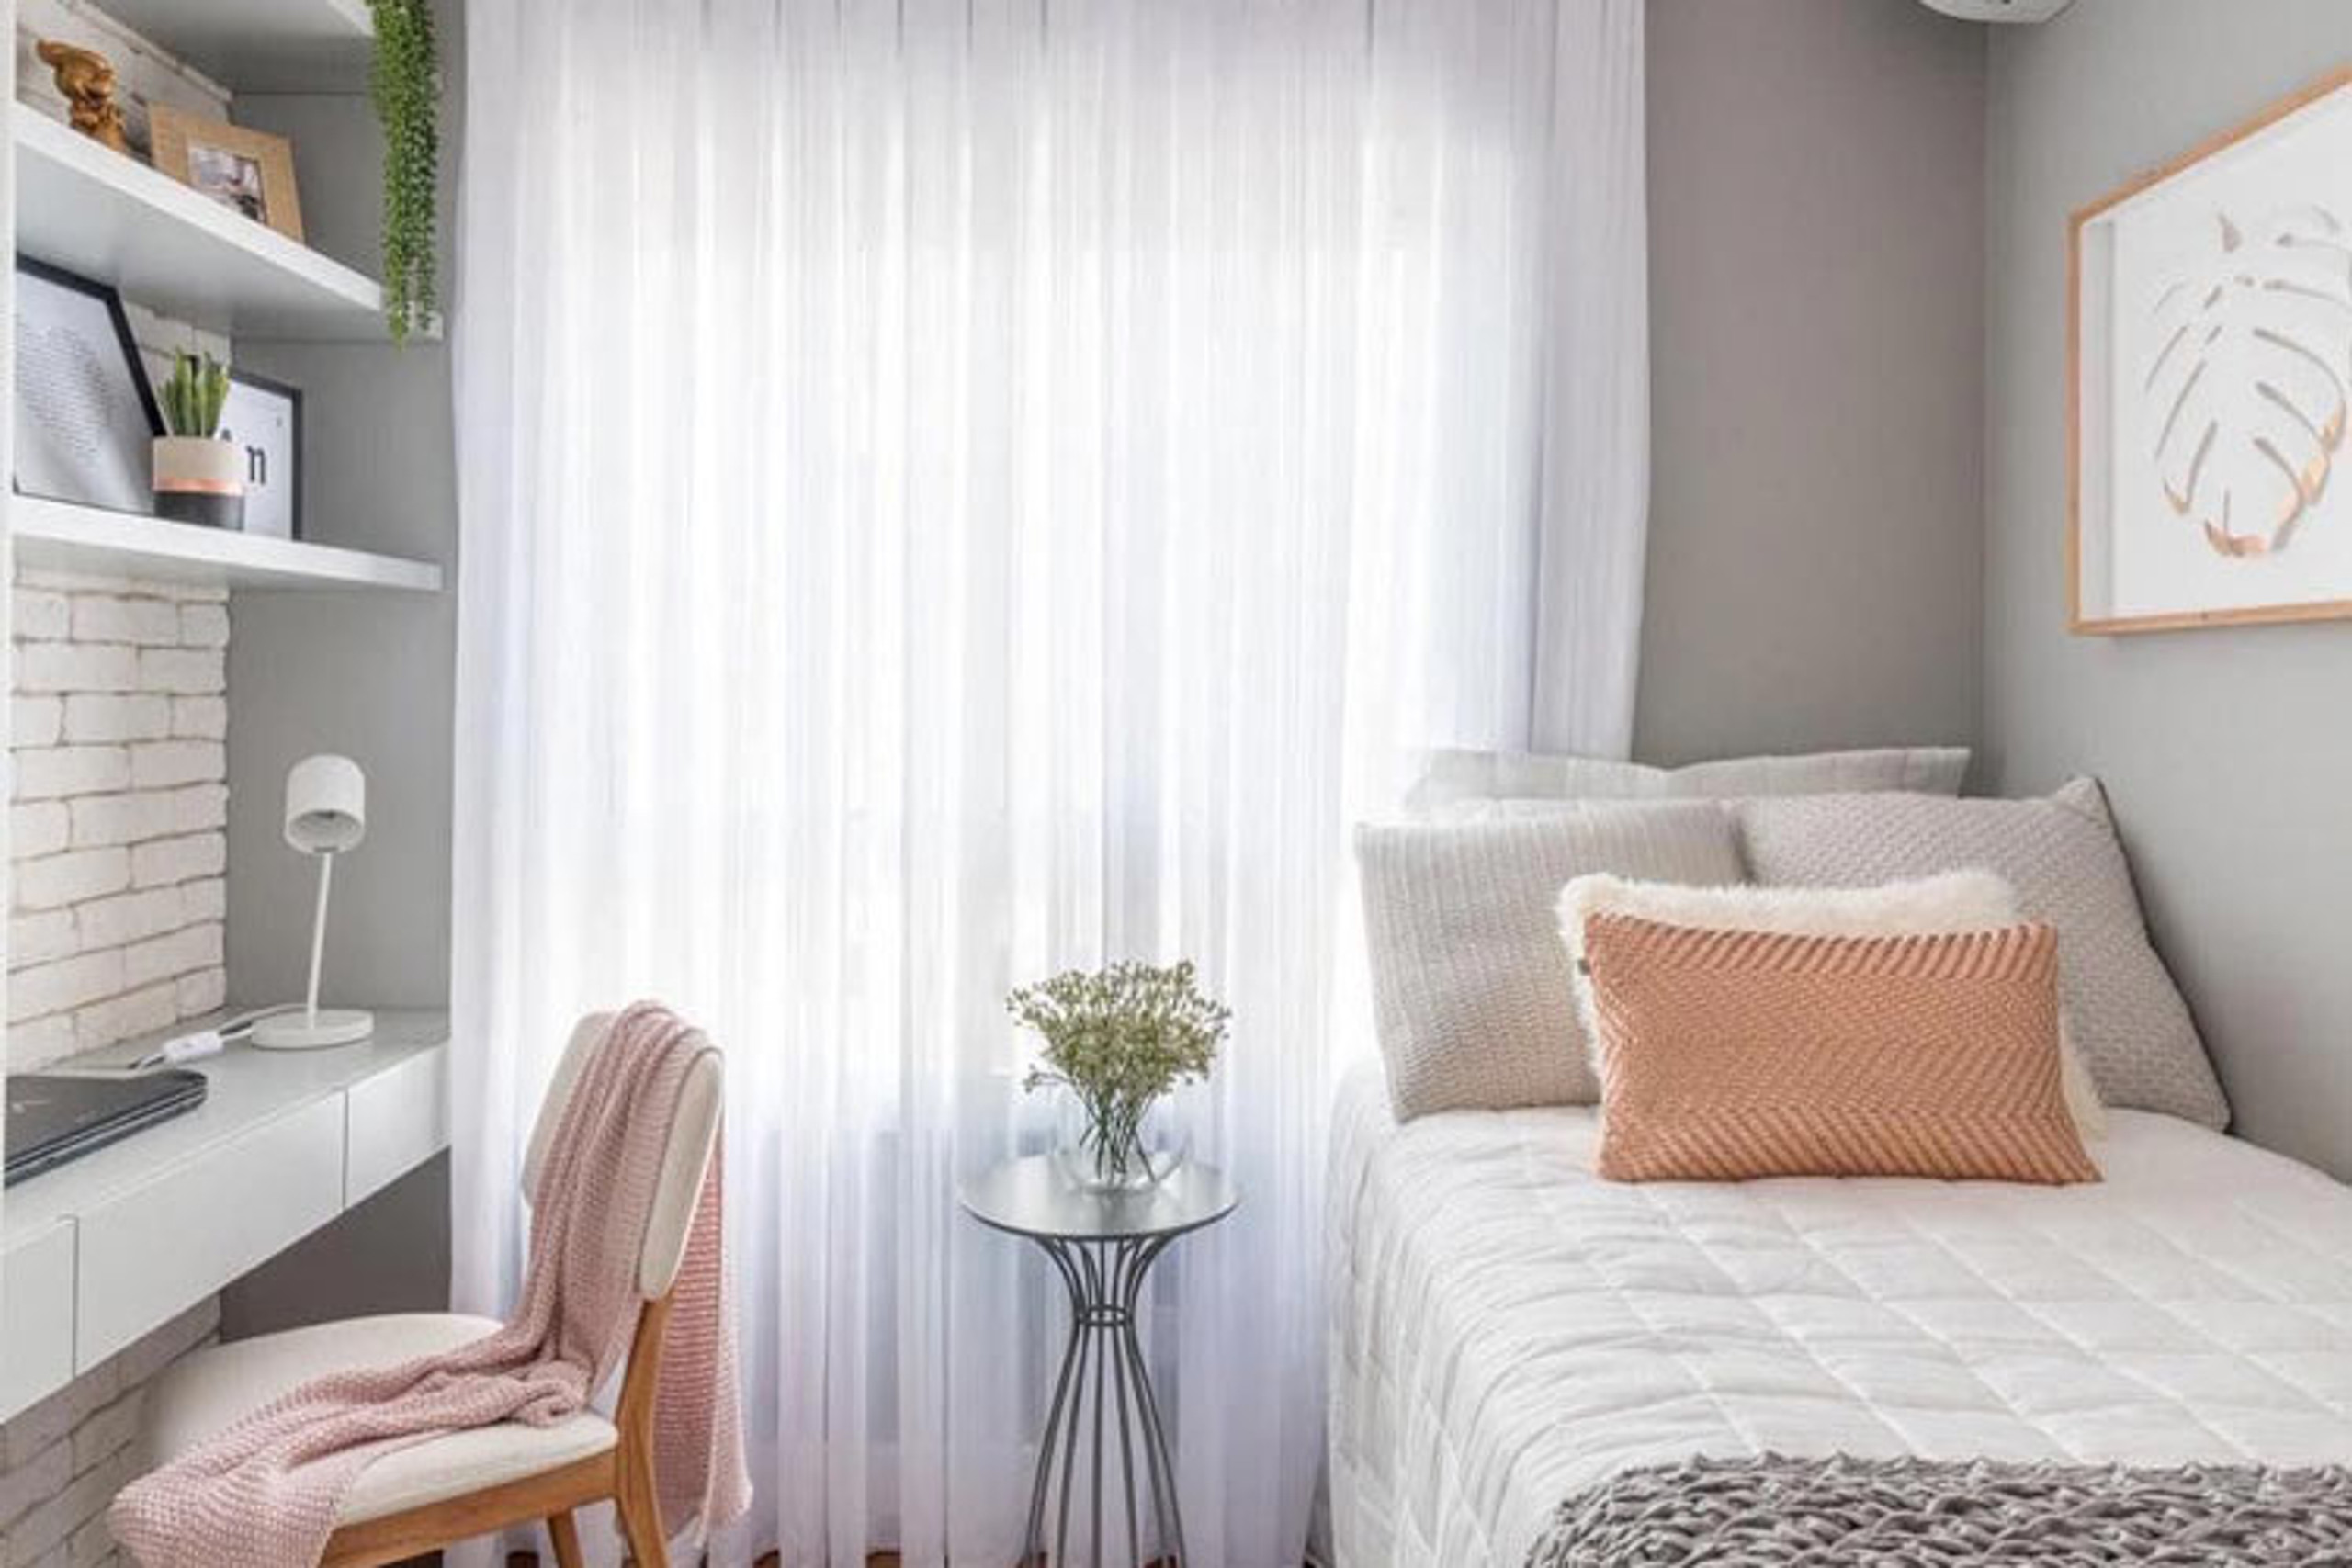 70 Inspiring Modern Bedroom Ideas - Best Modern Bedroom Designs